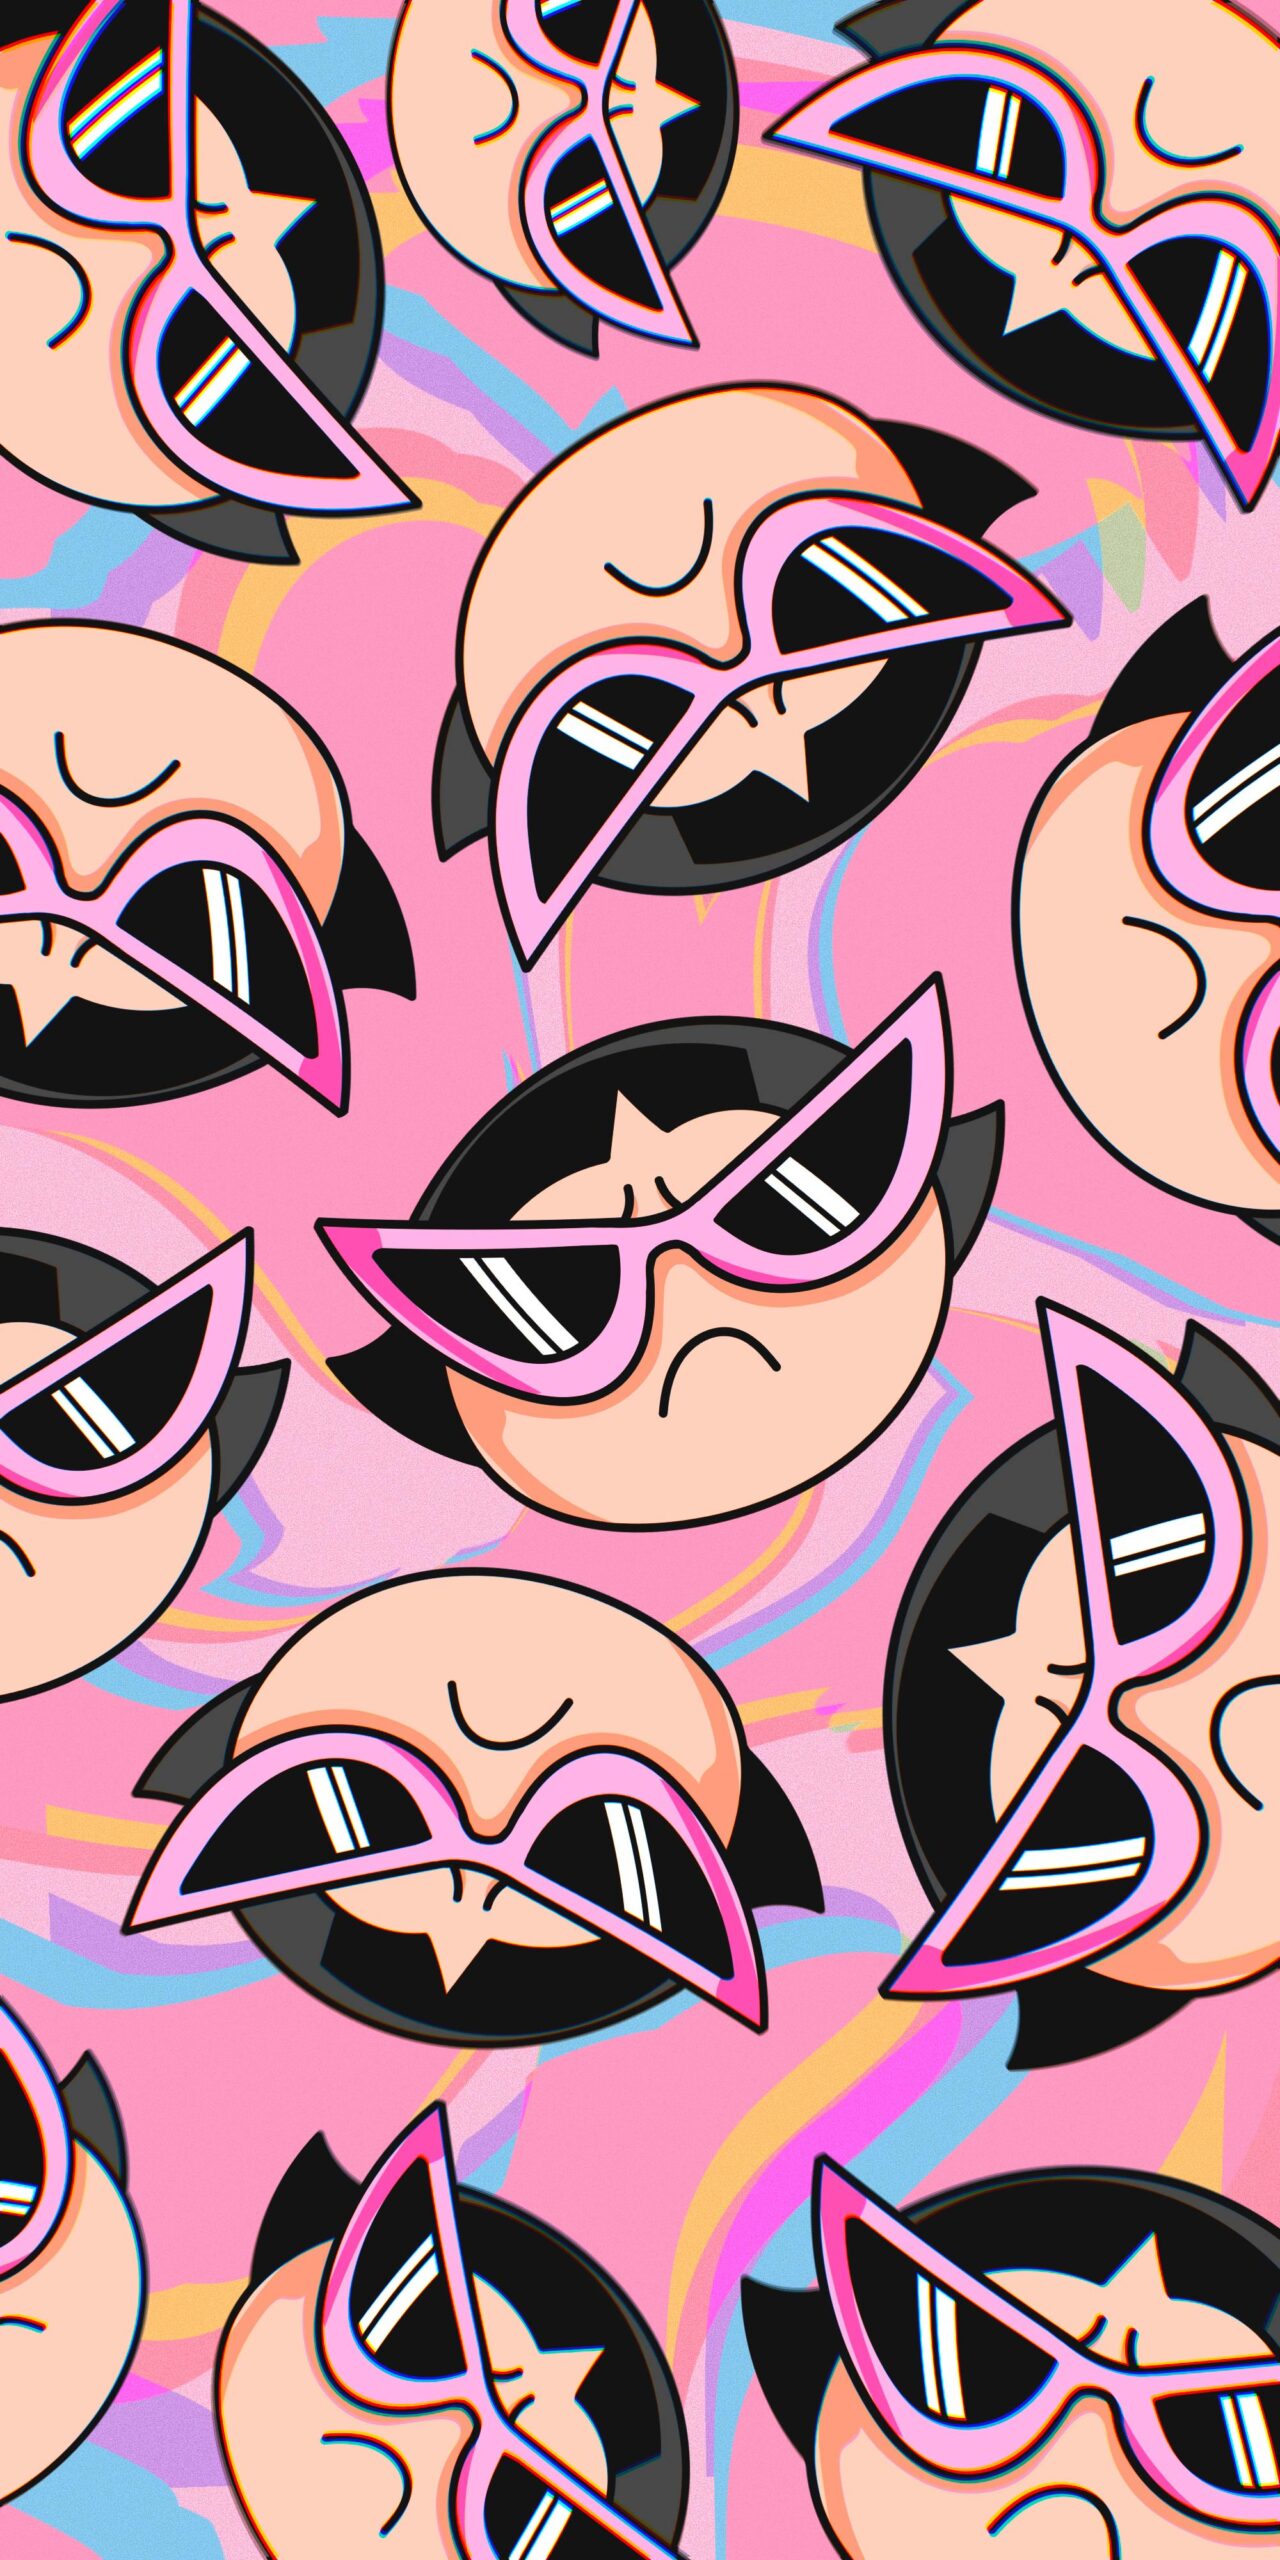 The Powerpuff Girls Wallpapers